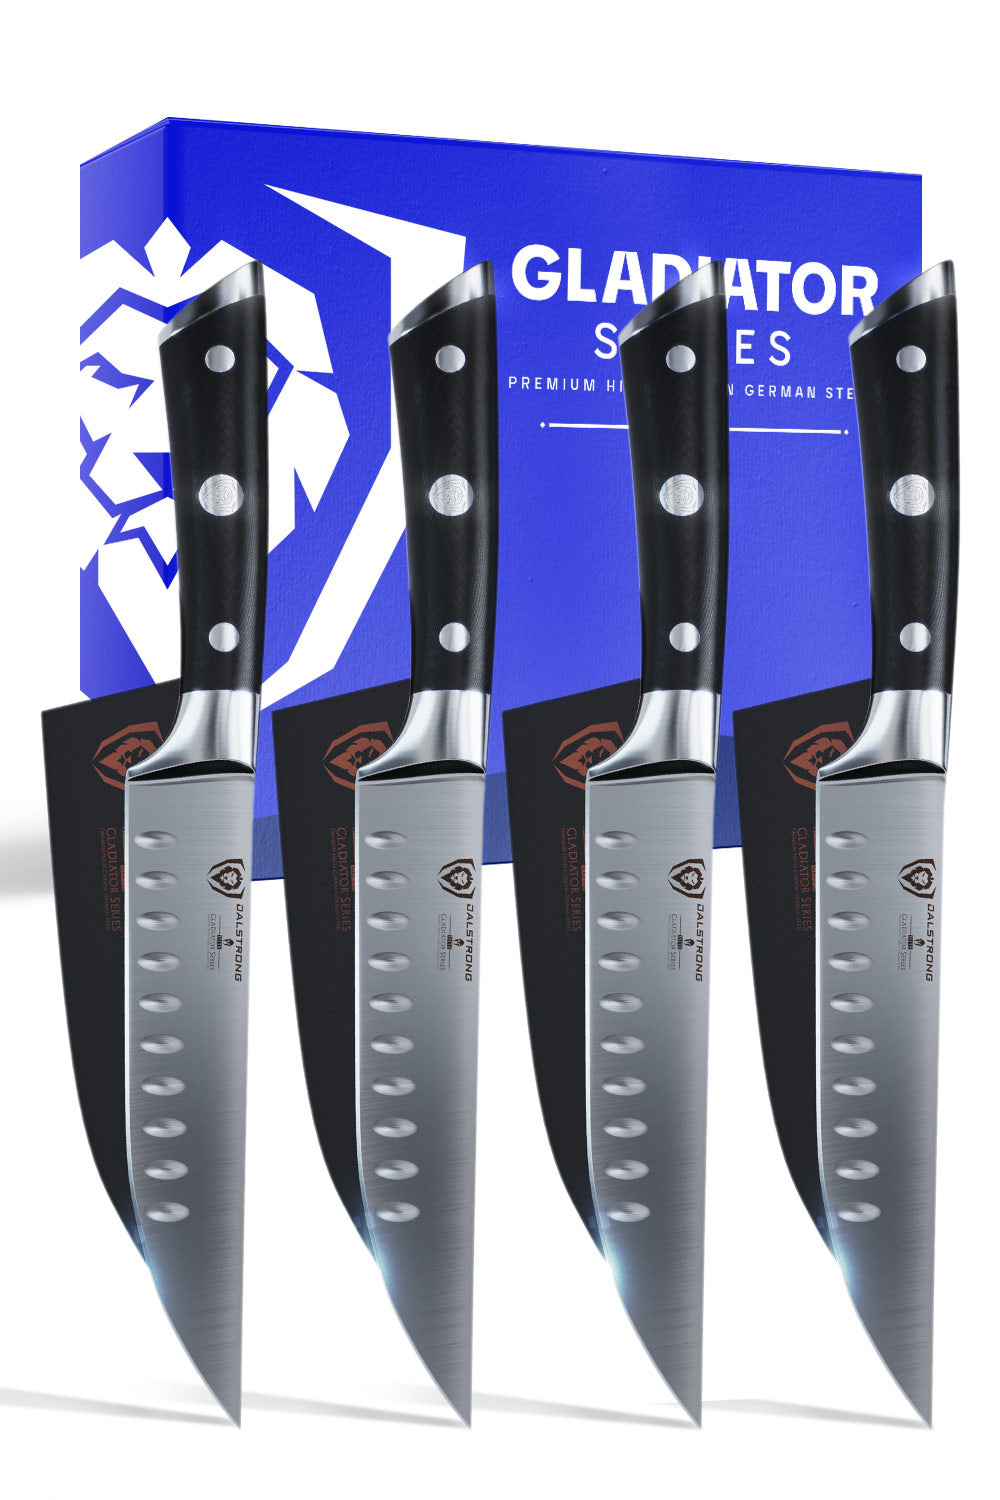 Dalstrong Knife Set Block - 8 Piece - Gladiator Series Knife Set - German HC Steel - G10 Garolite Handles - NSF Certified